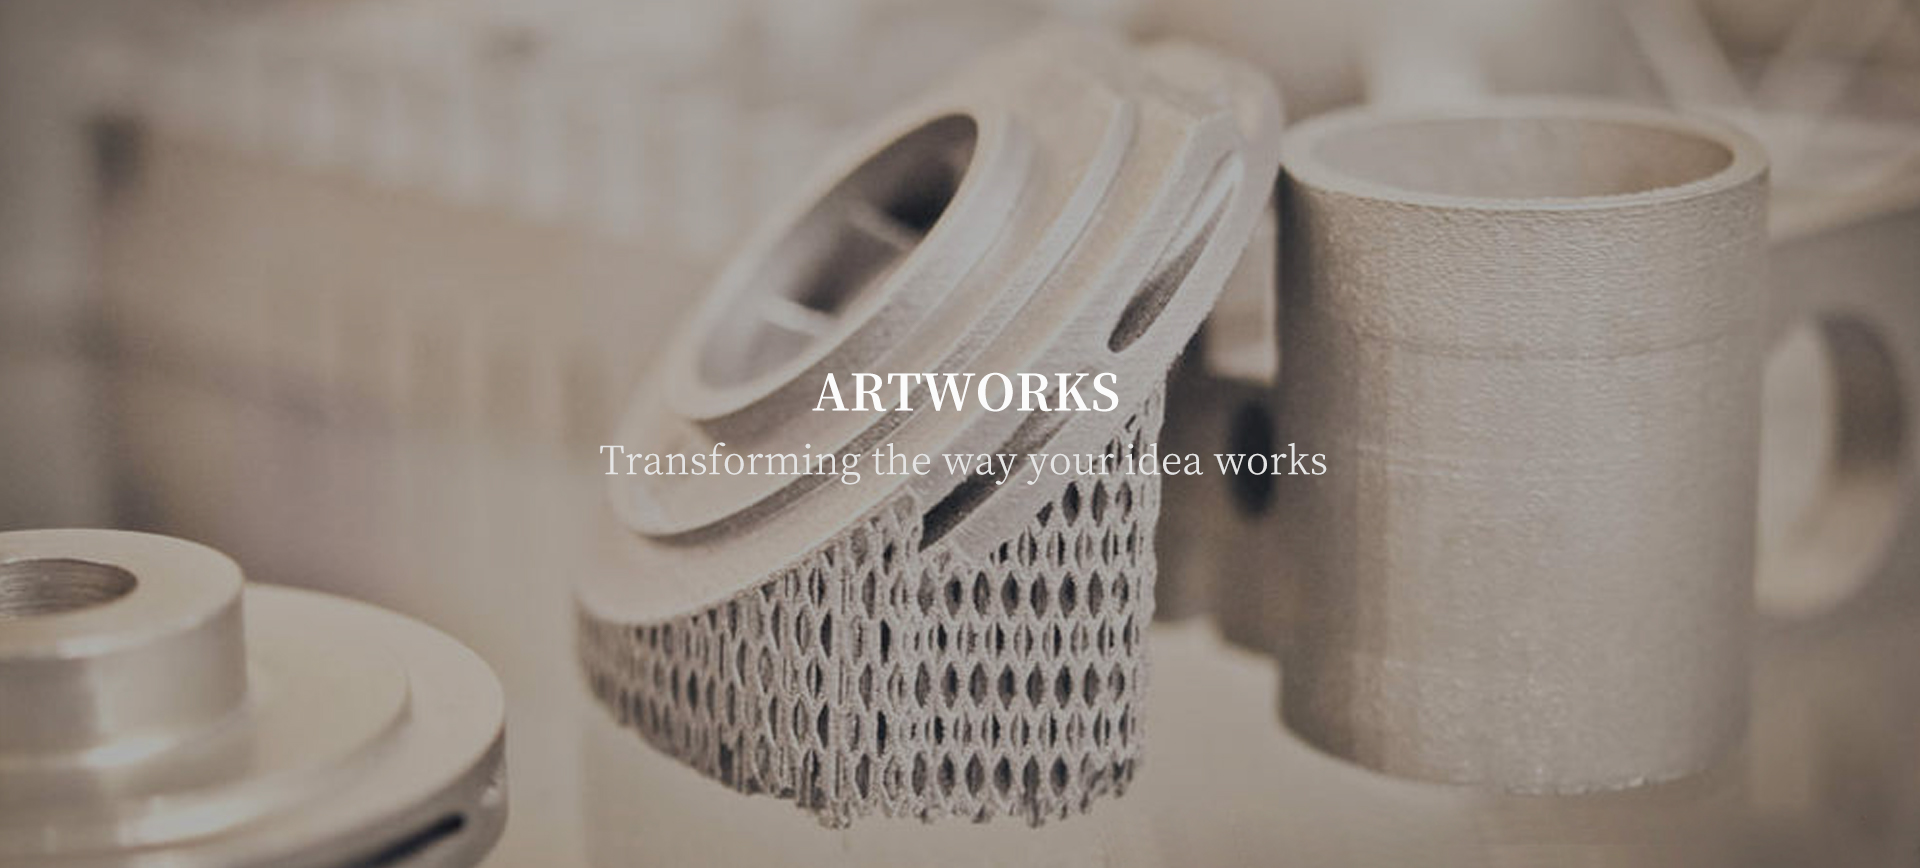 Tronhoo 3D Printers for Artworks Industry